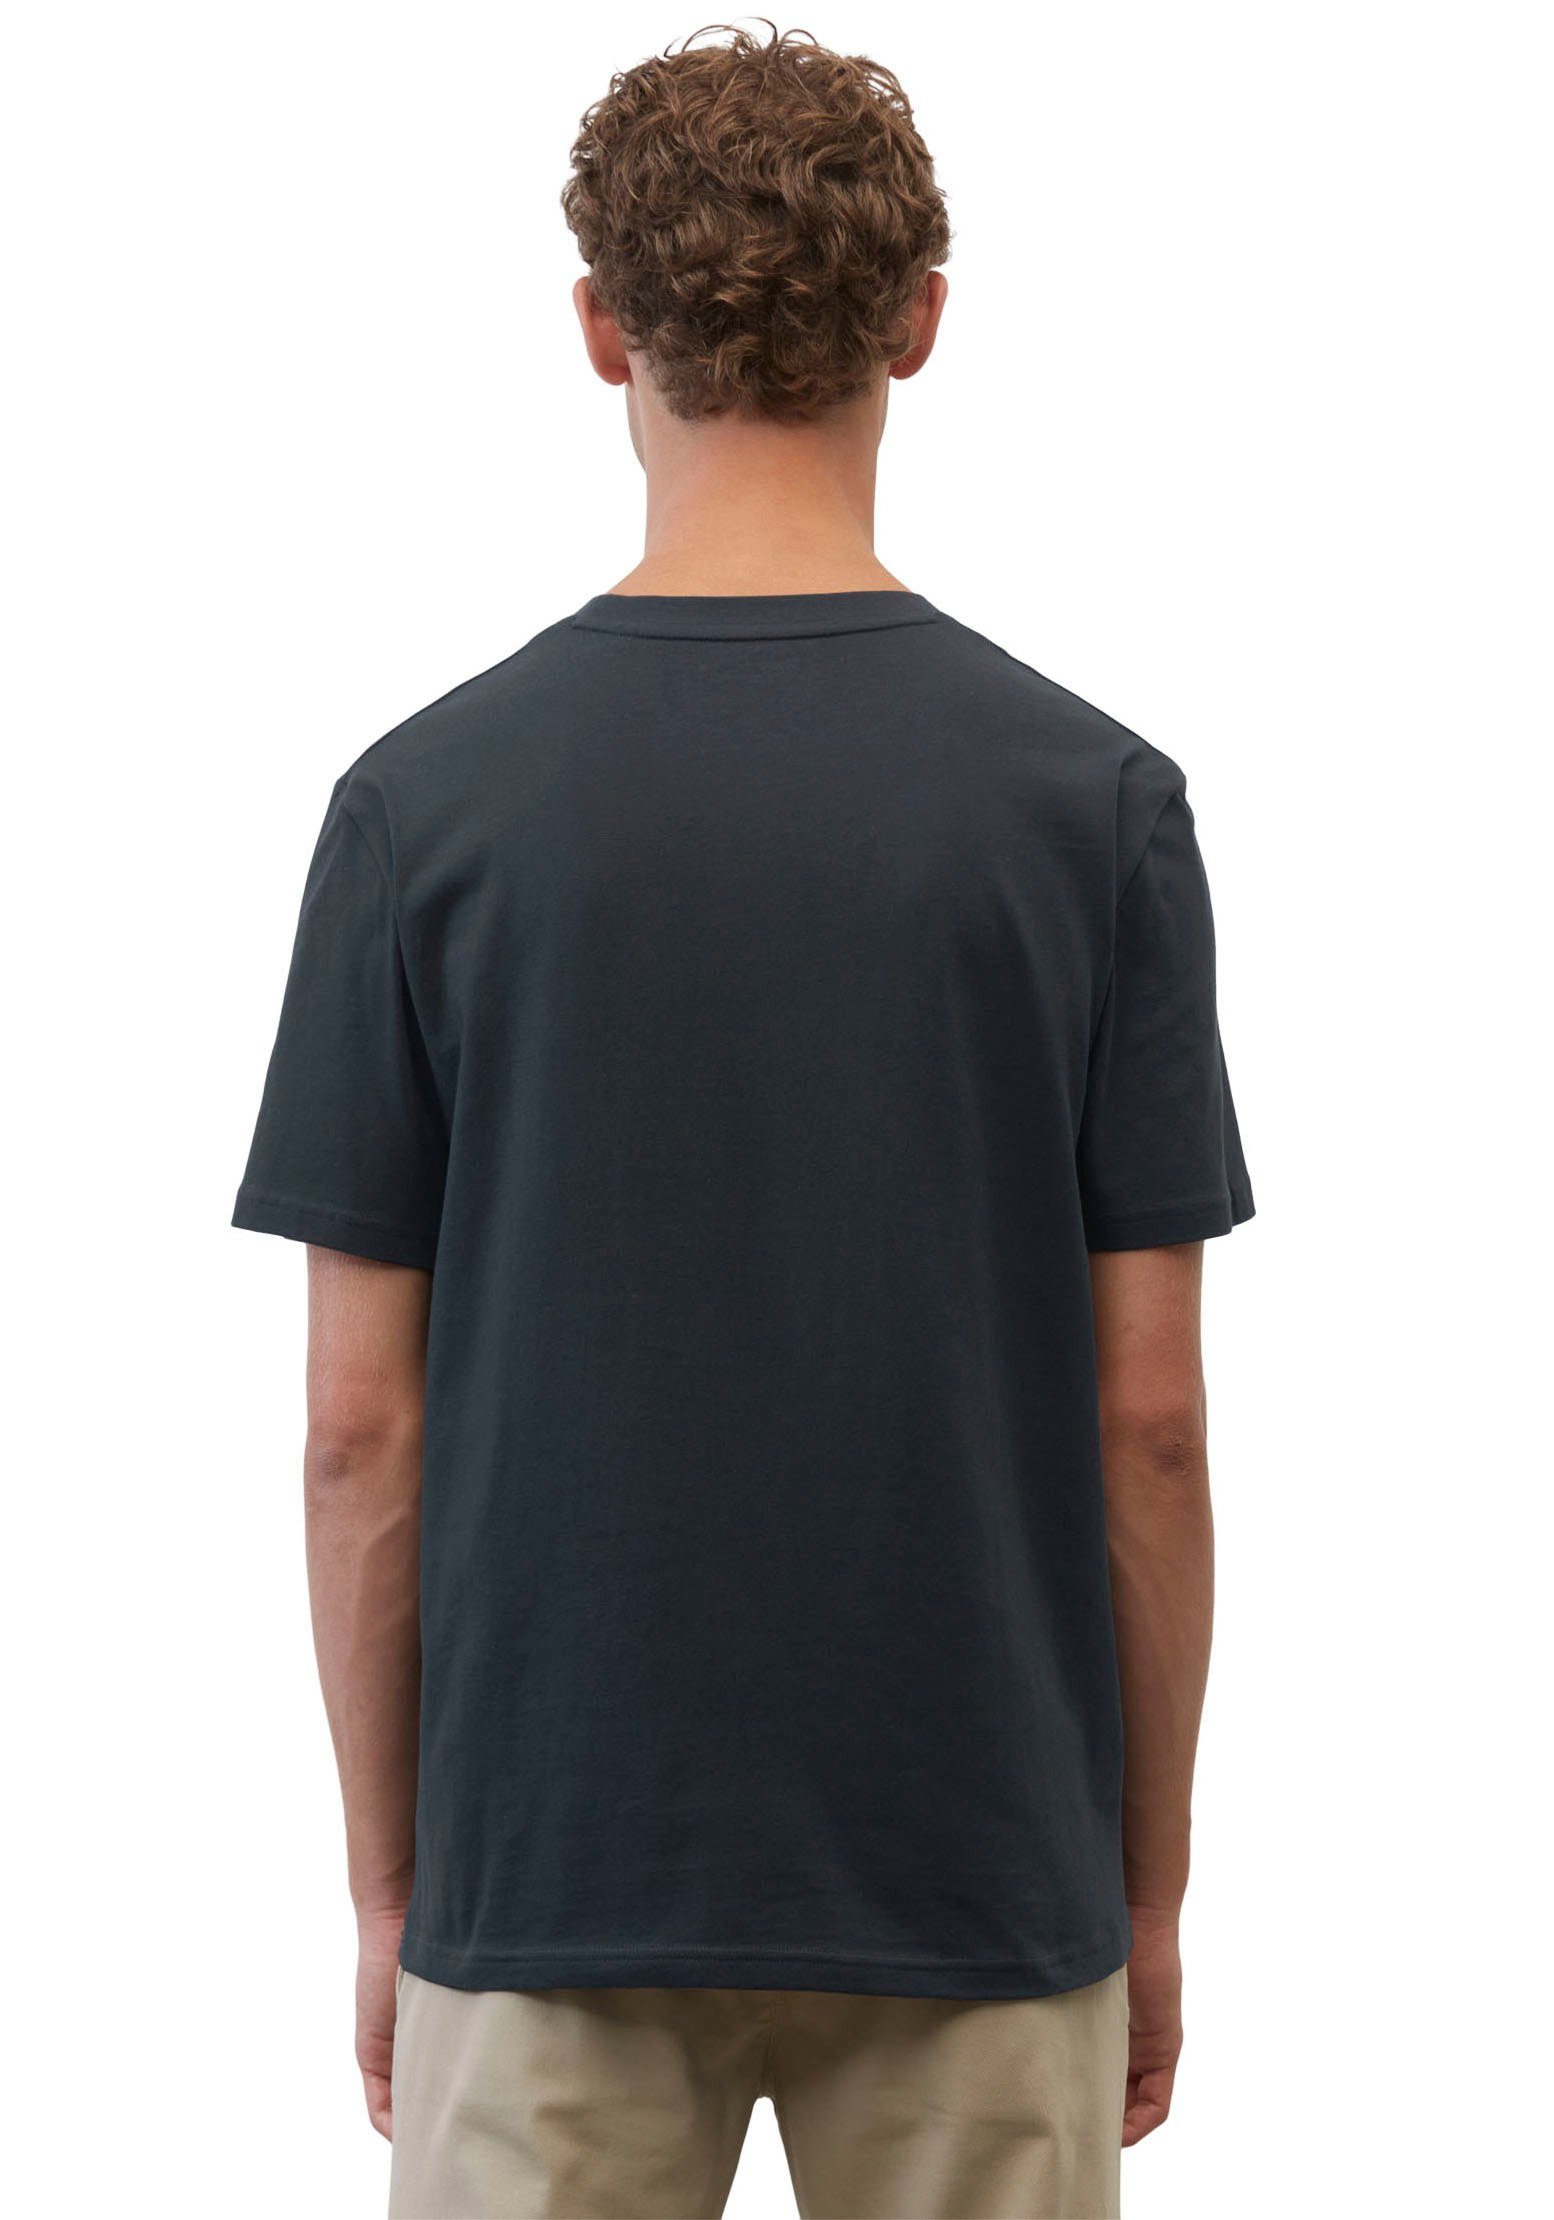 Marc O'Polo T-Shirt klassisches Logo-T-Shirt night dark